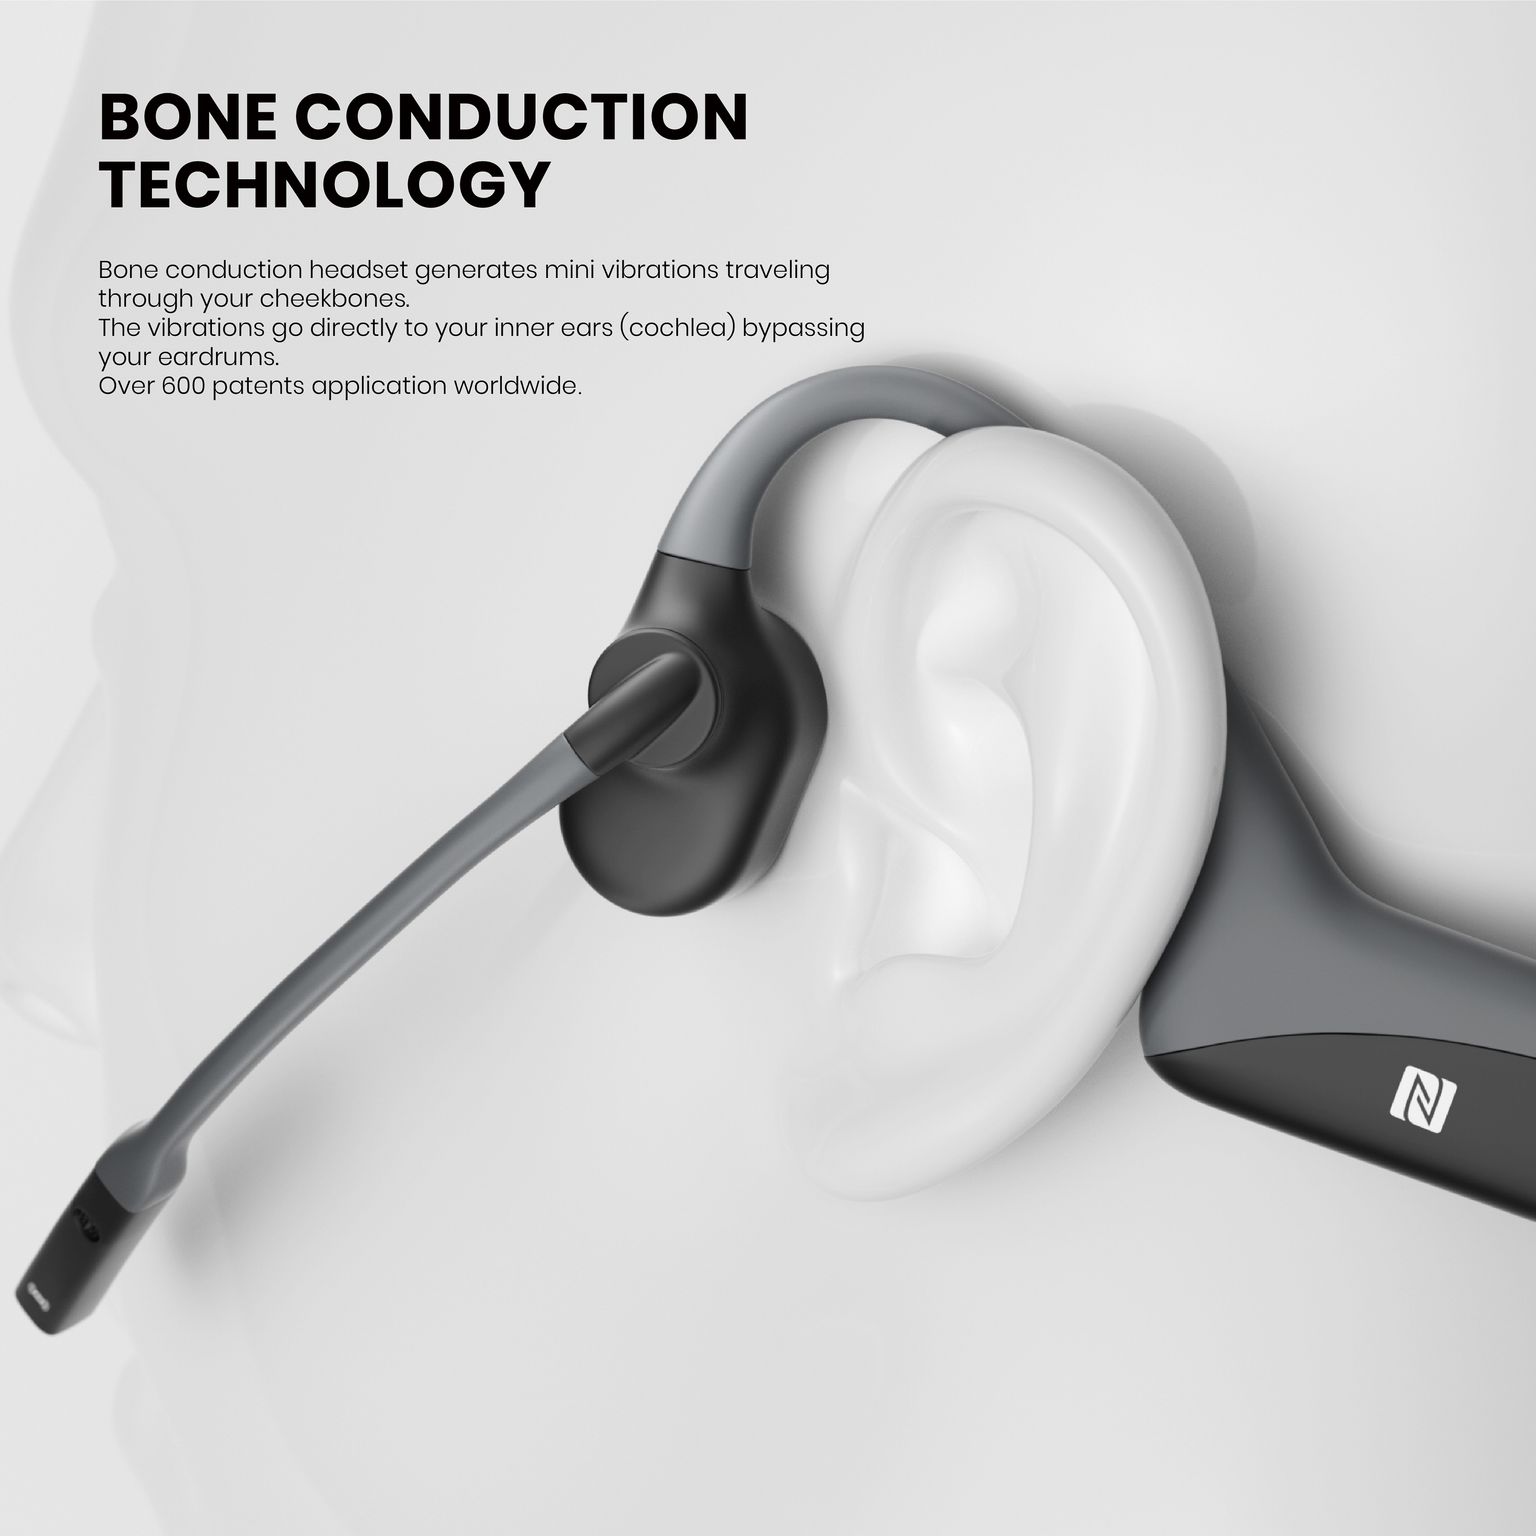 Aftershokz OpenComm Bone Conduction Headset